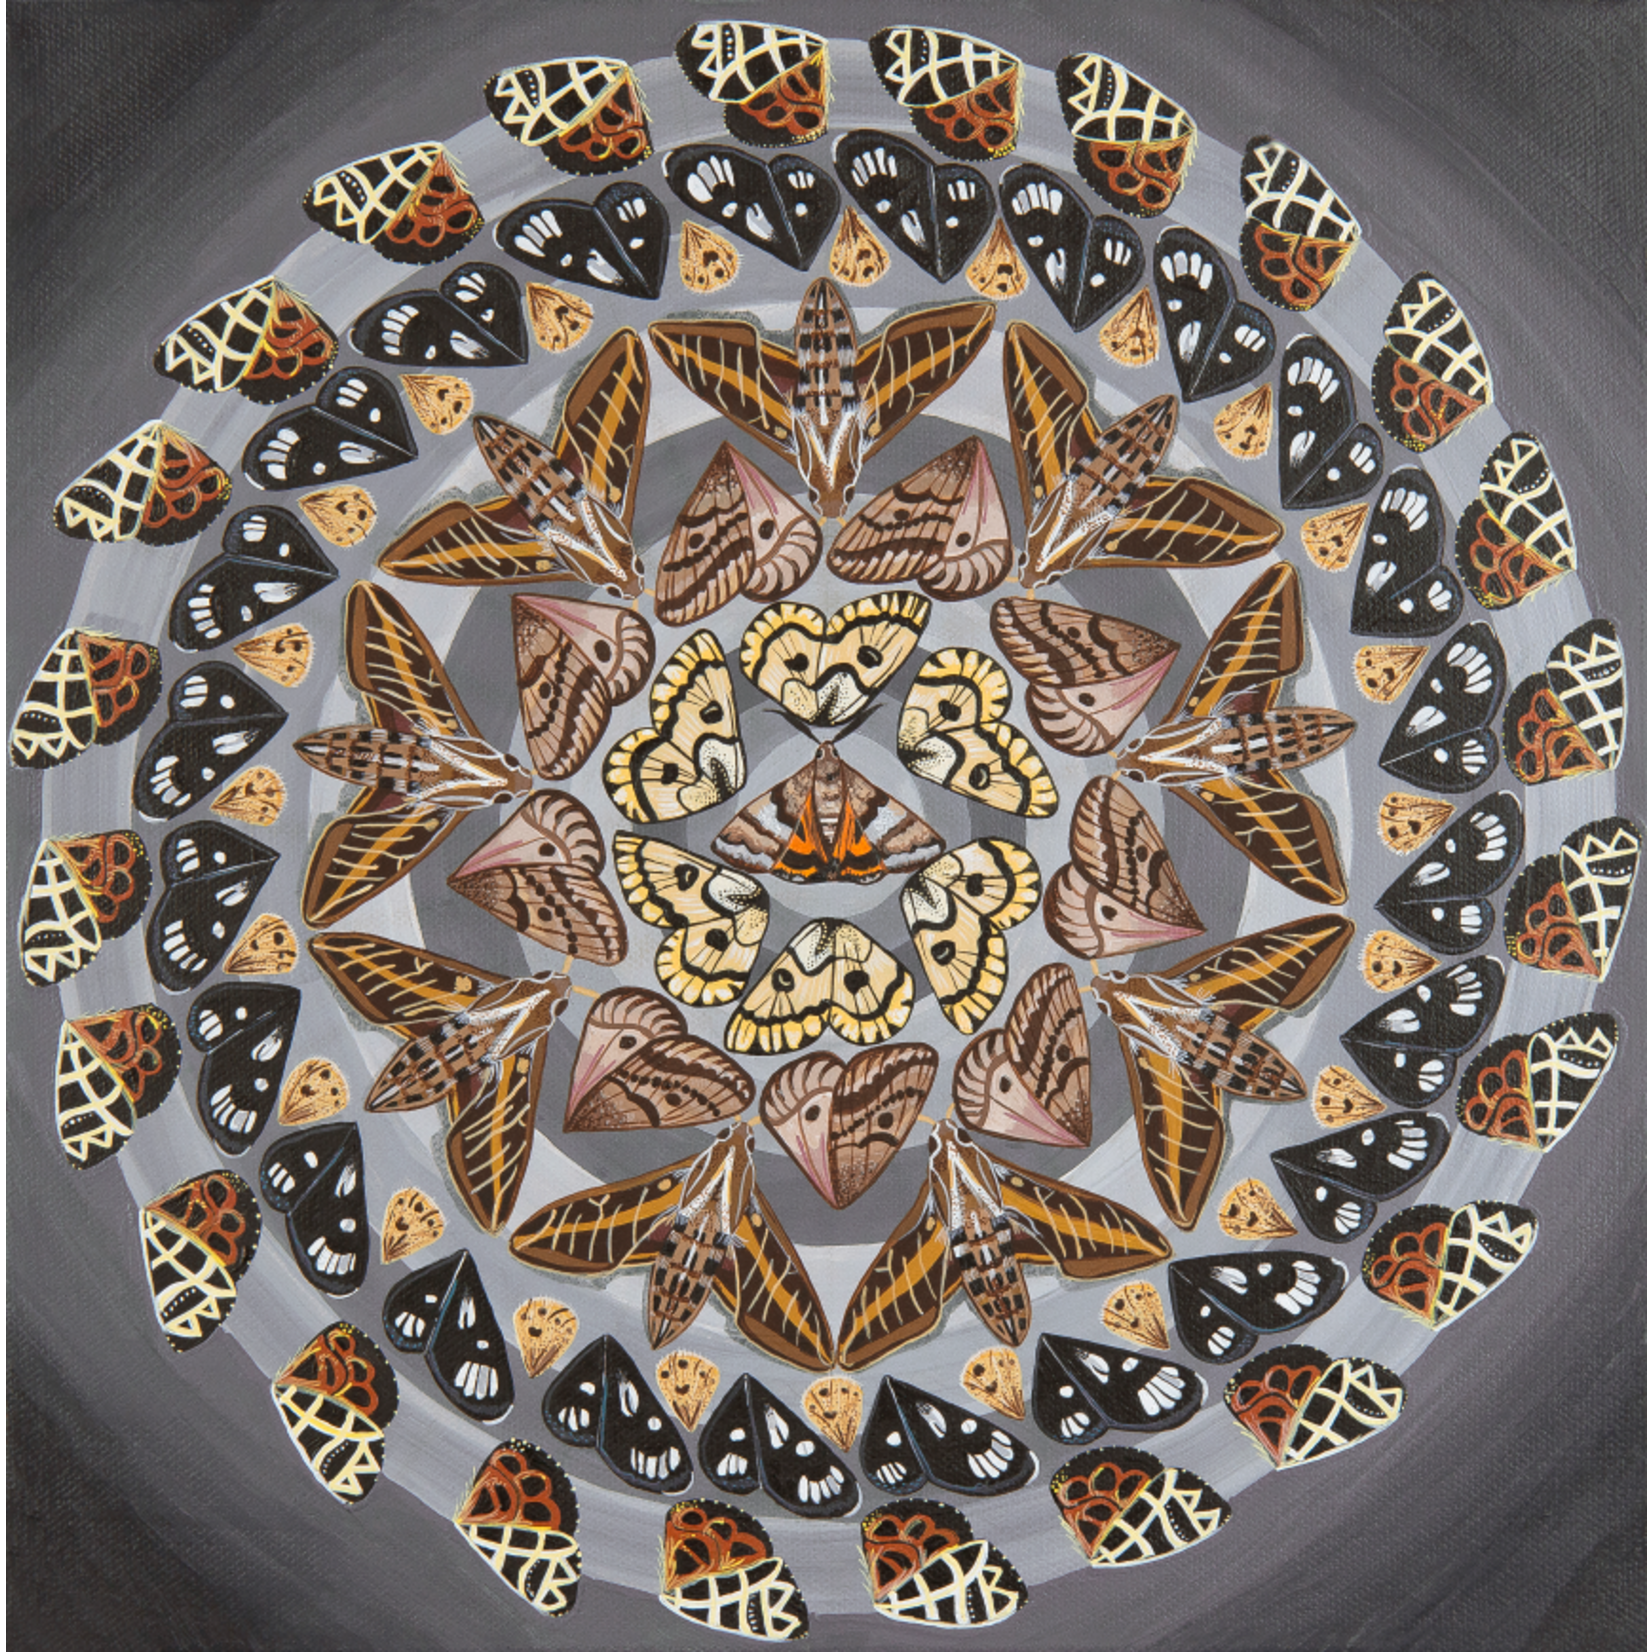 Stirling Studios "Mothdala" Mandala Canvas Print